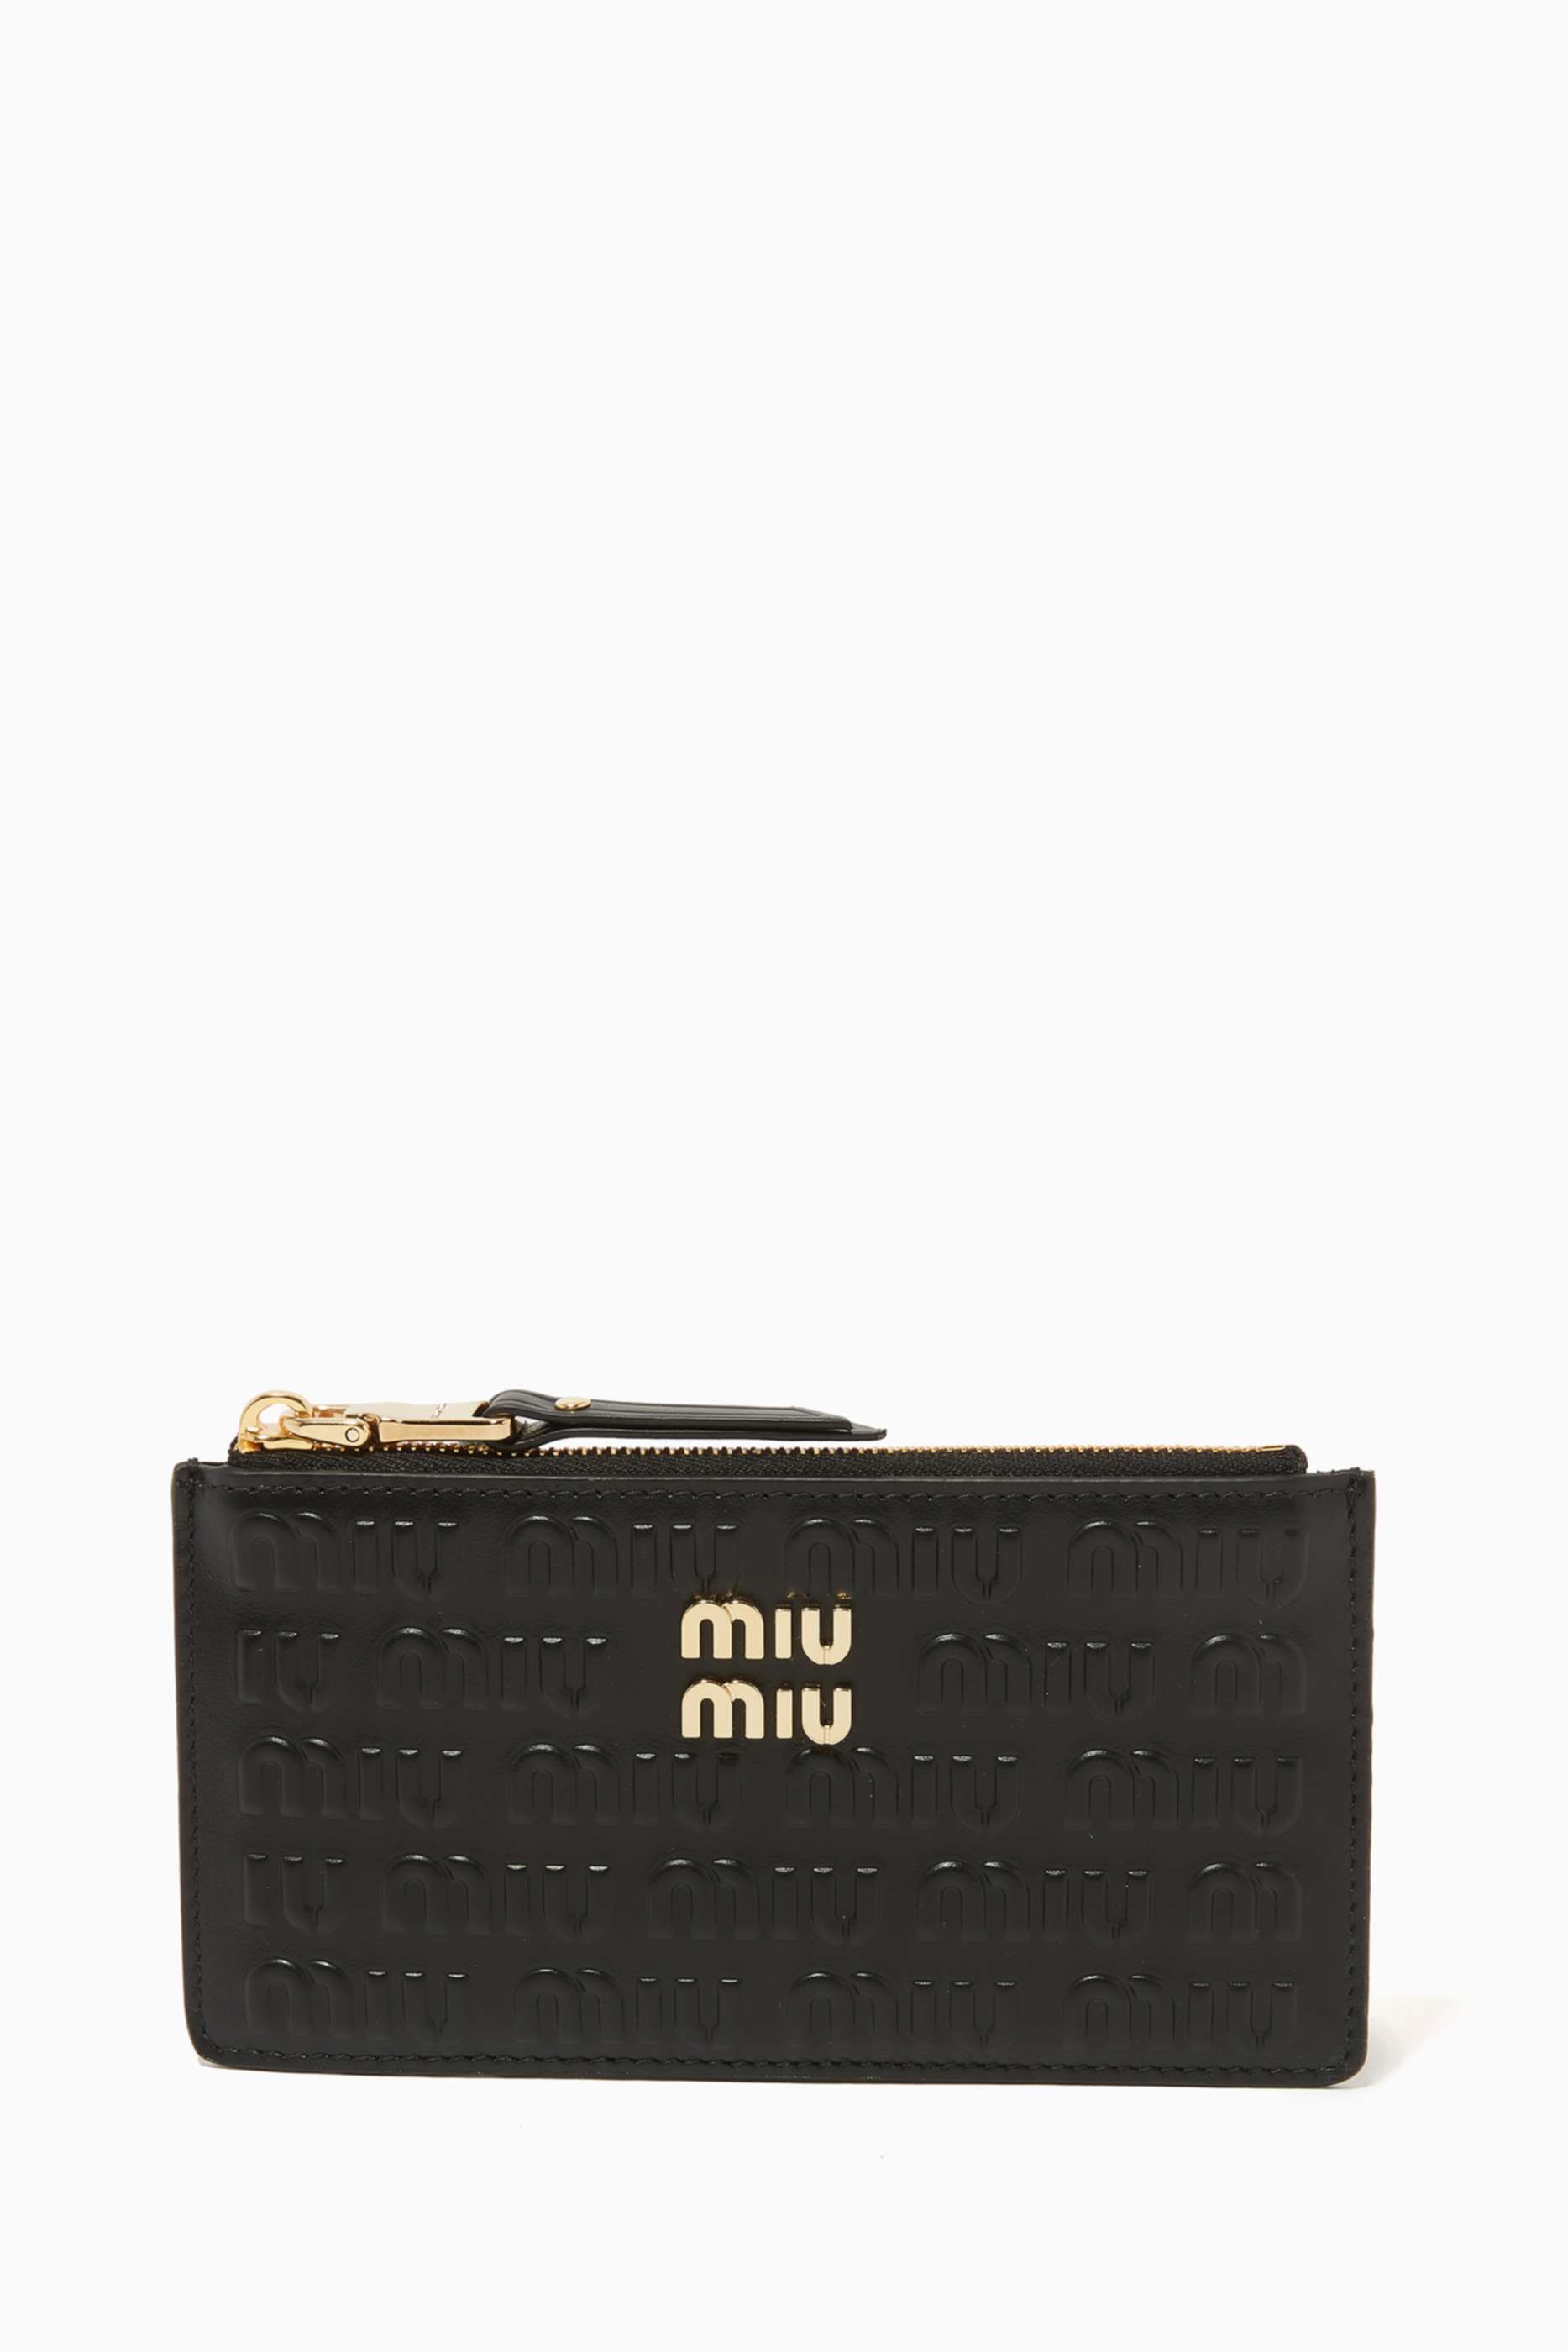 shop-miu-miu-minuteria-zipped-wallet-in-nappa-leather-for-women